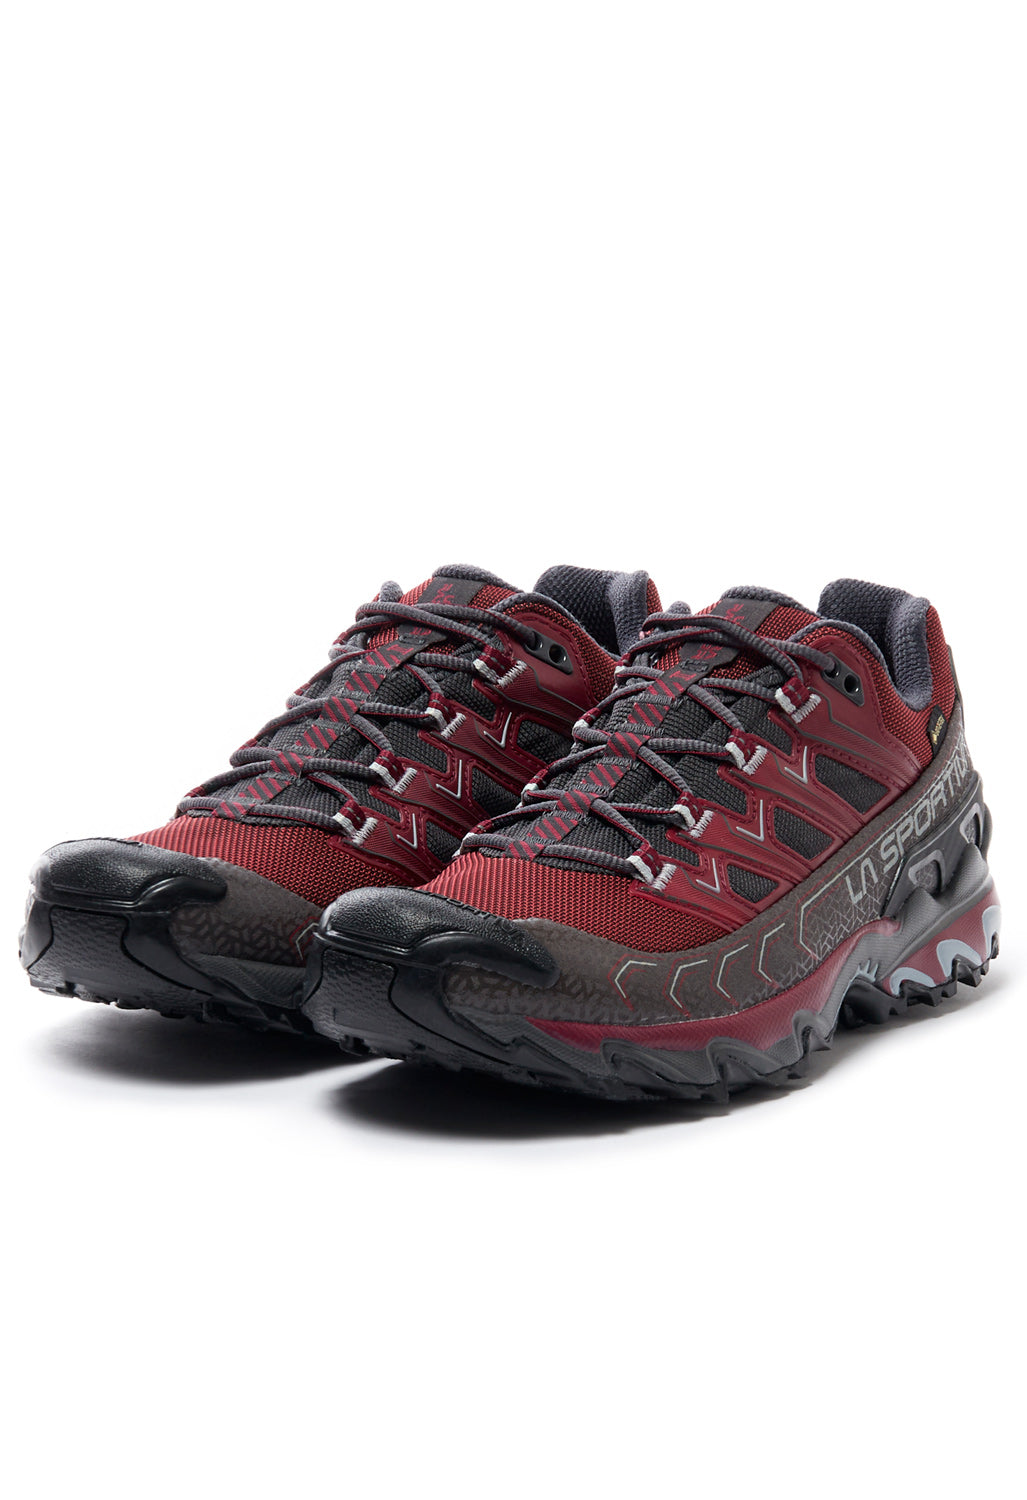 La Sportiva Ultra Raptor II GORE-TEX Women's Shoes - Red Plum/Carbon